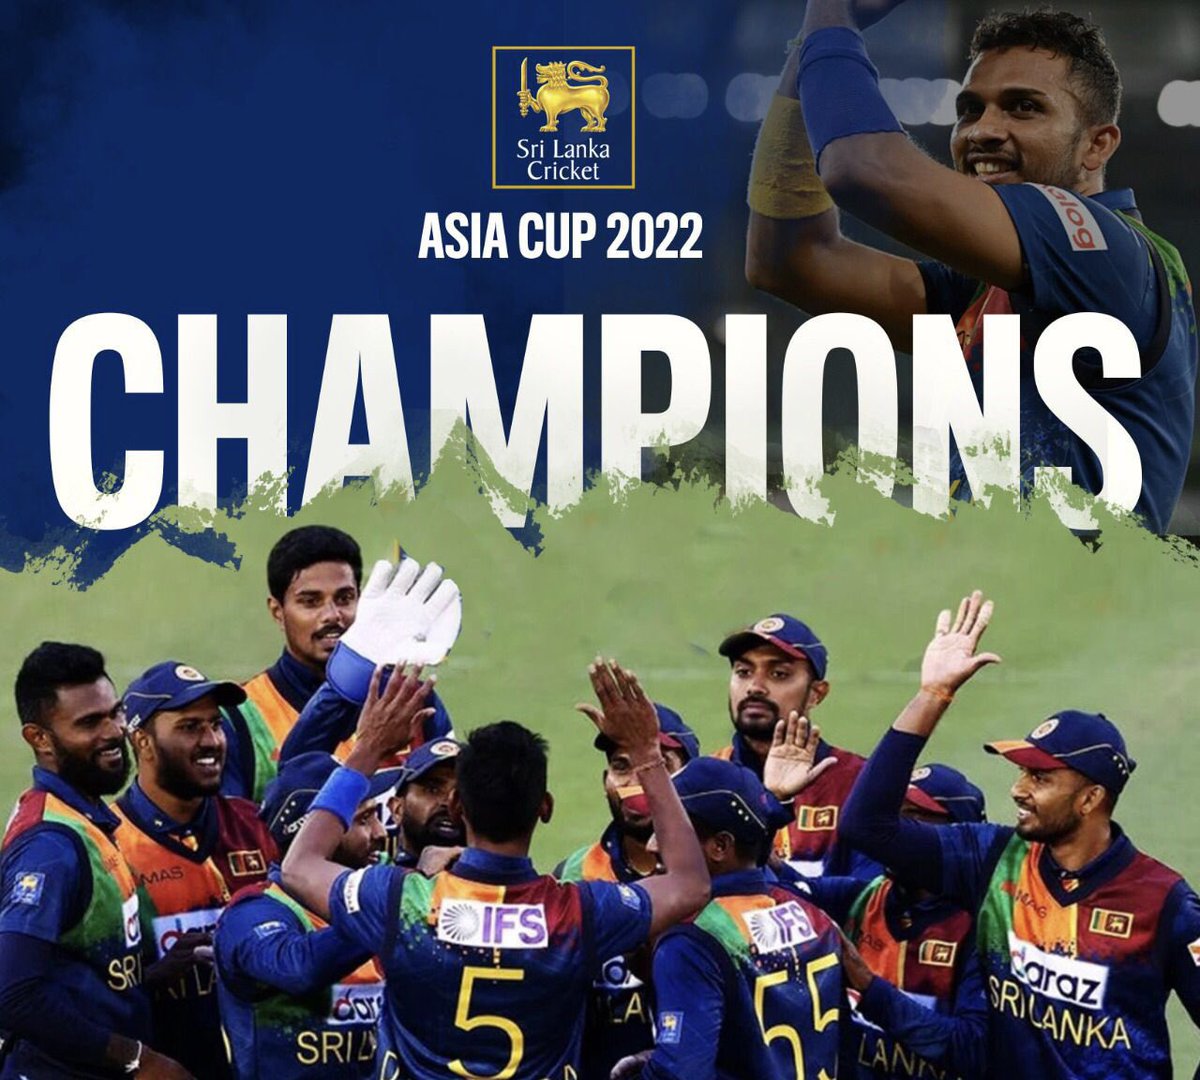 Well deserved #SriLanka #Champions

#AsiaCup2022Final #AsiaCup2022 #PAKvSL #AsiaCupT20 #srilankavspakistan #SriLankaLegends #Cricket #CricketTwitter @SriLankaTweet @dasunshanaka1